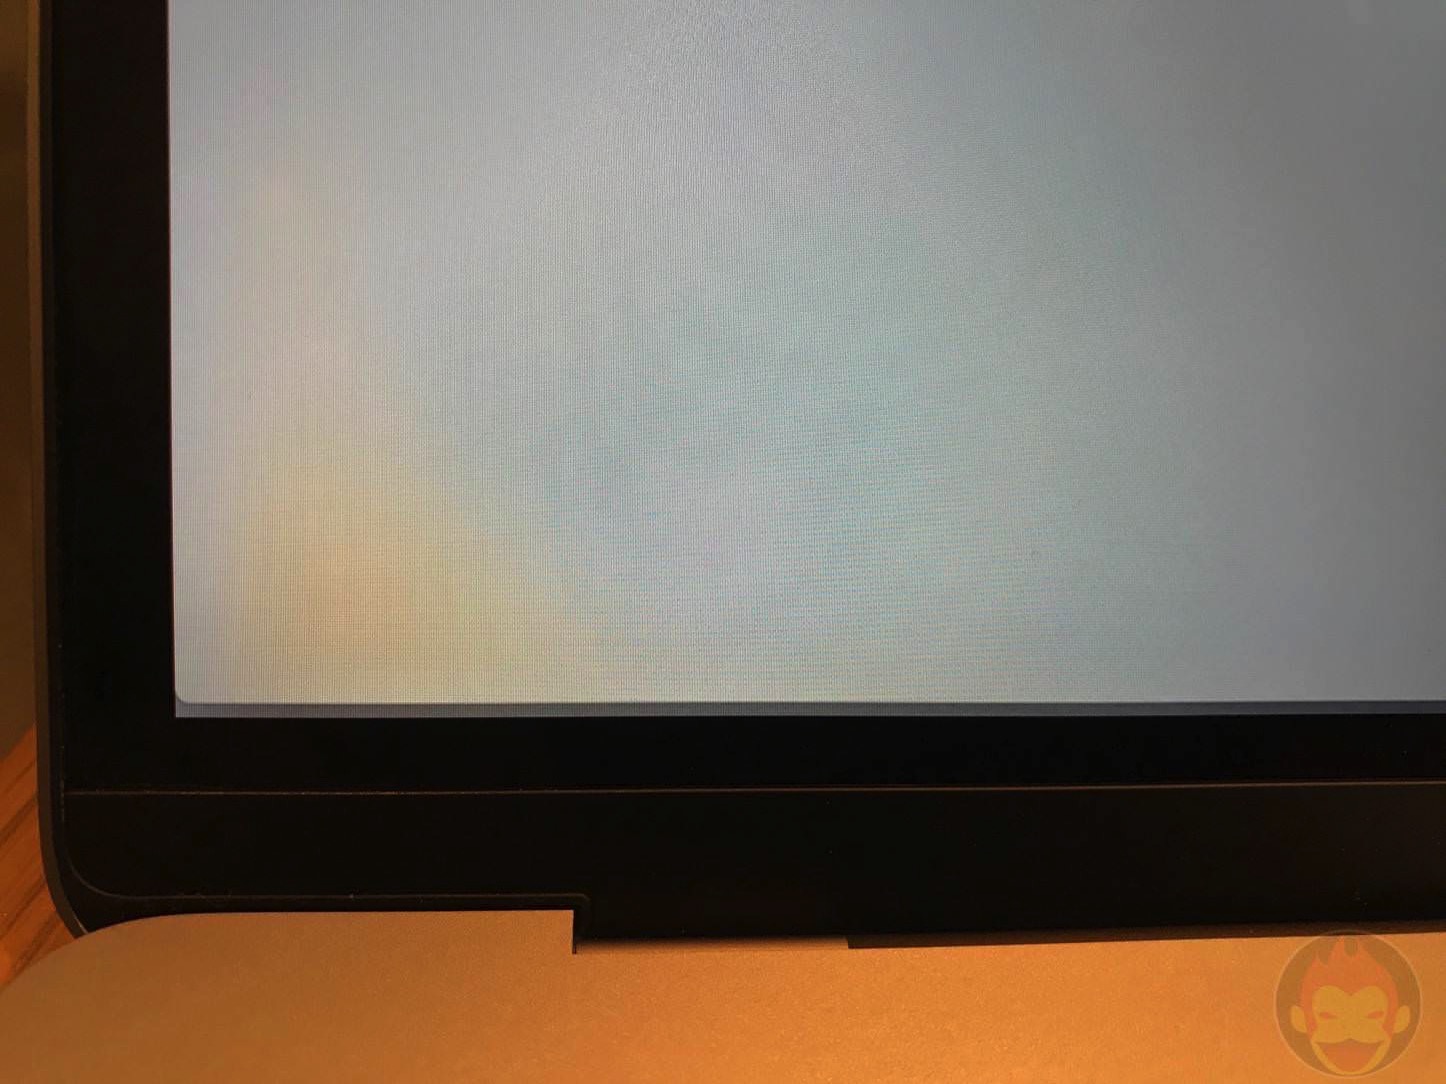 MacBook-Pro-2016-suffering-from-display-smear-05.jpg